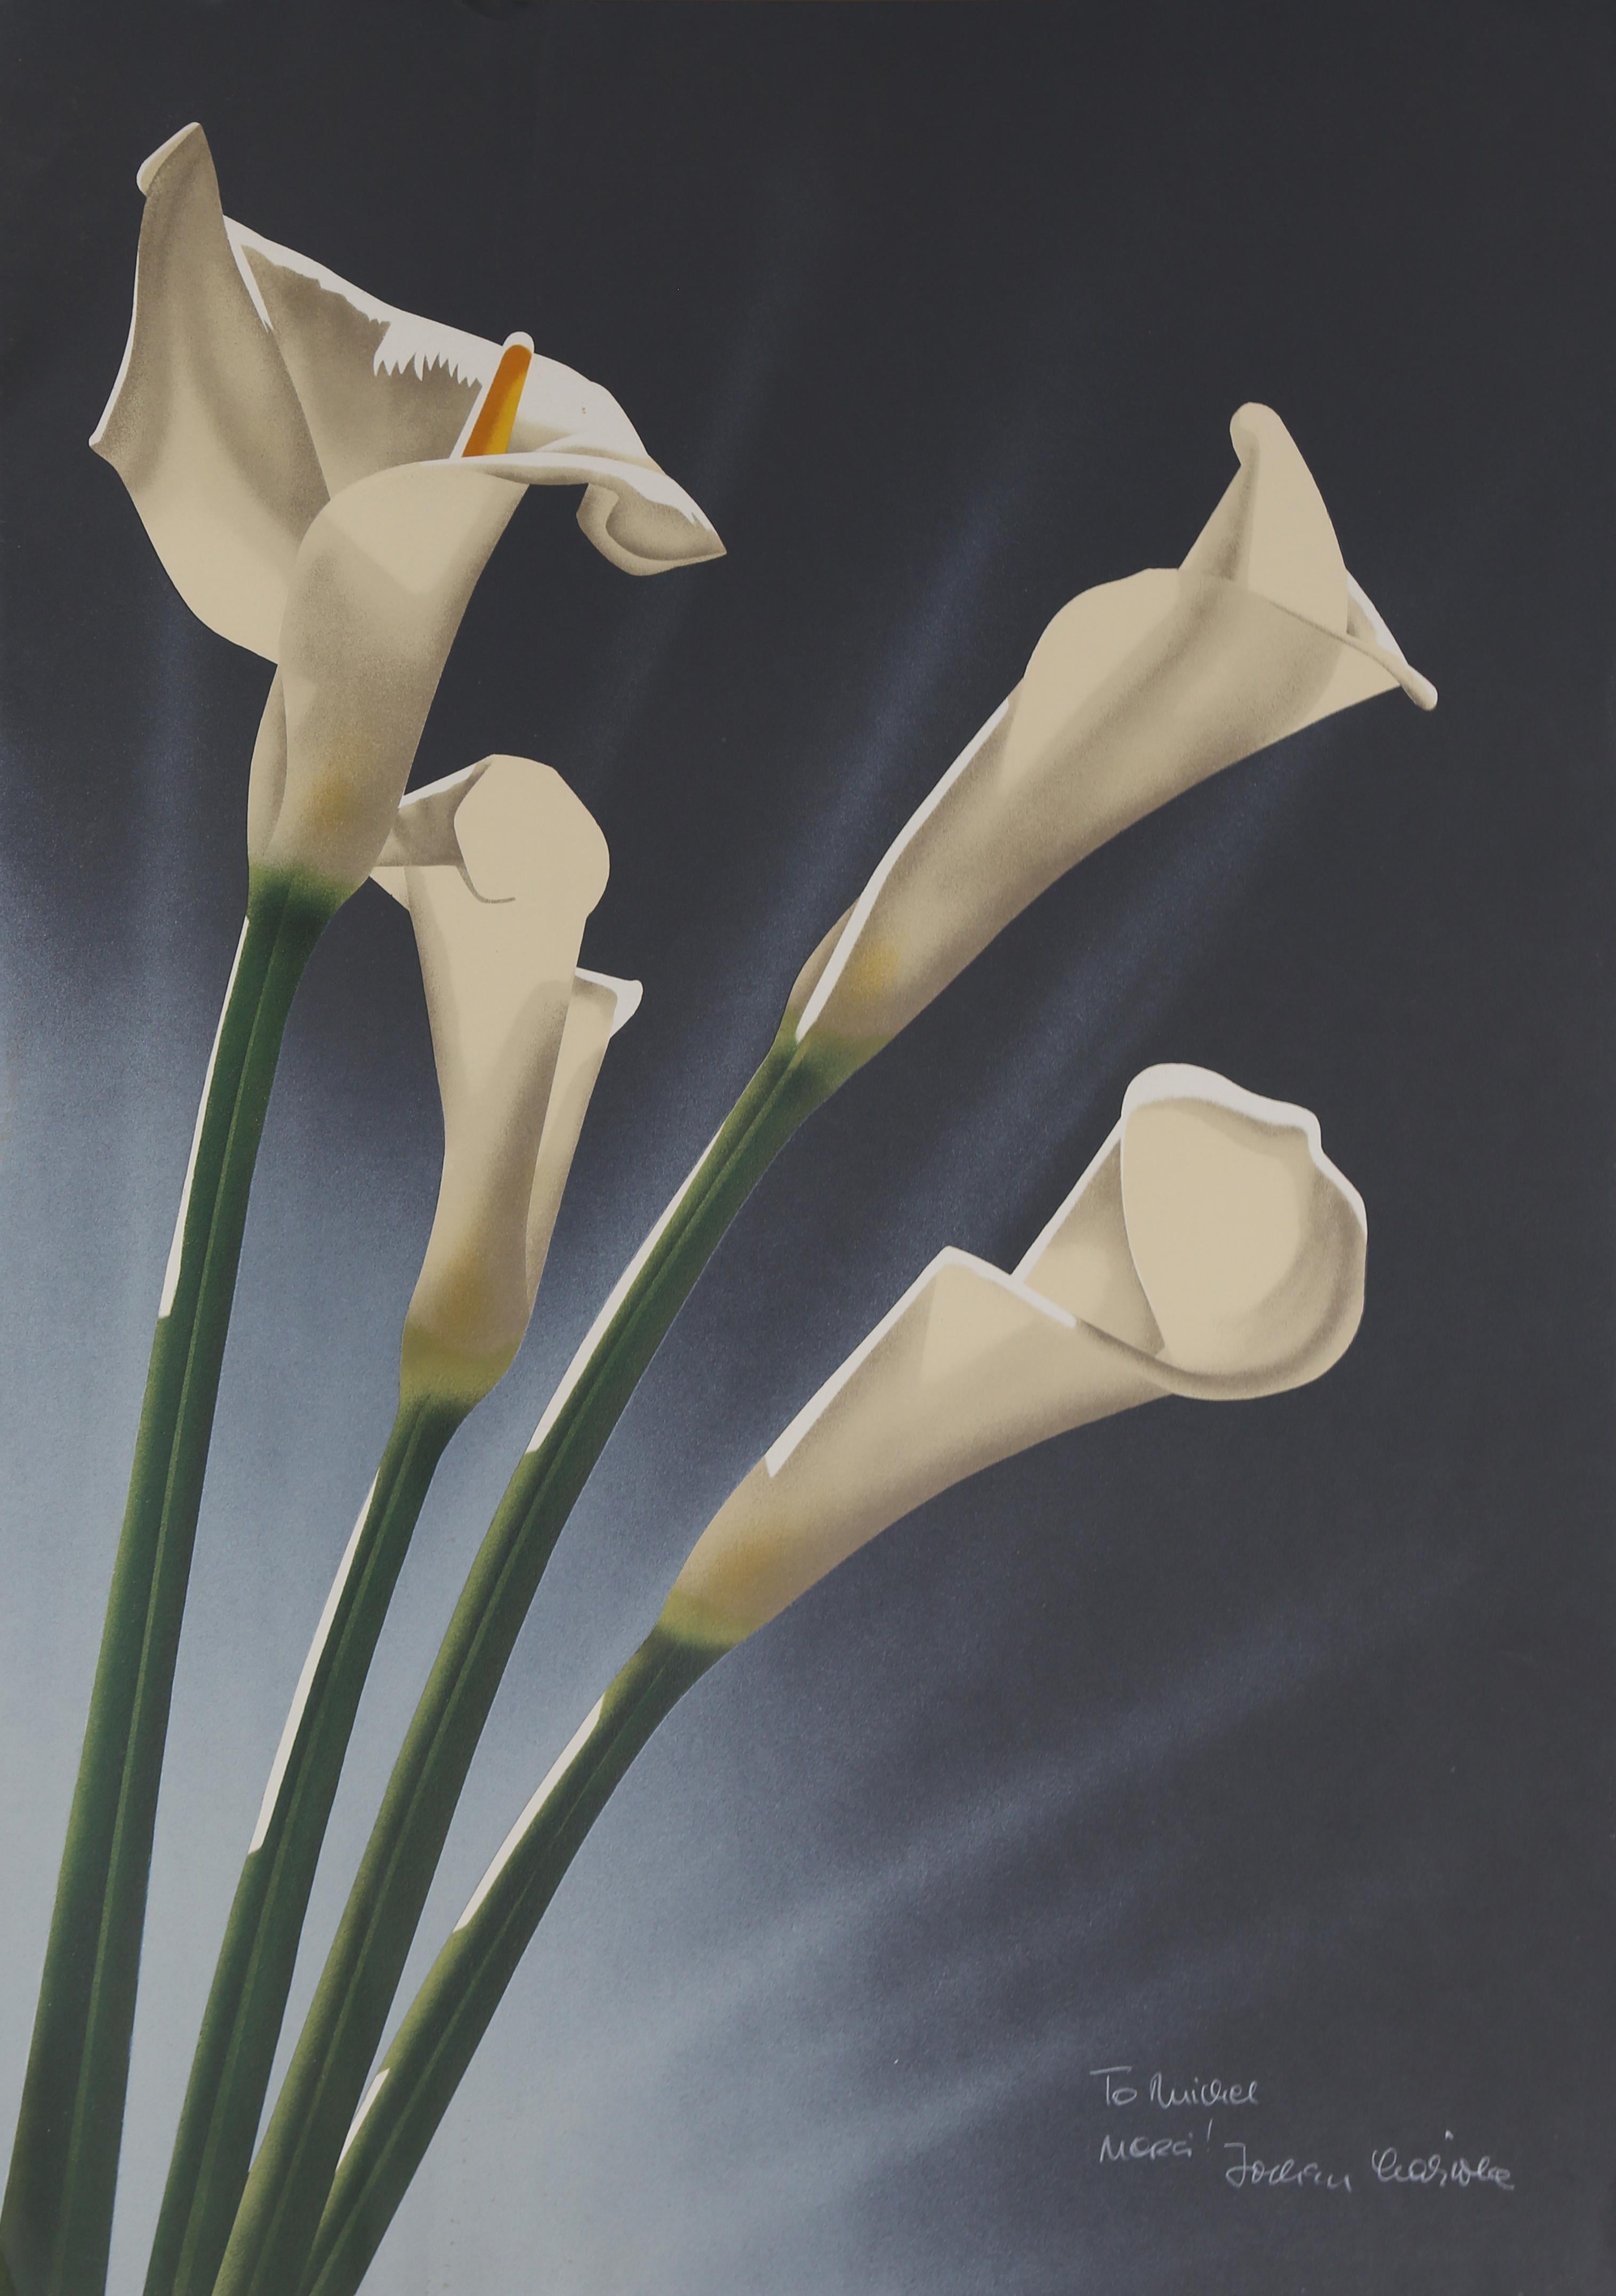 Jochen Labriola Print - White Calla Lilies 